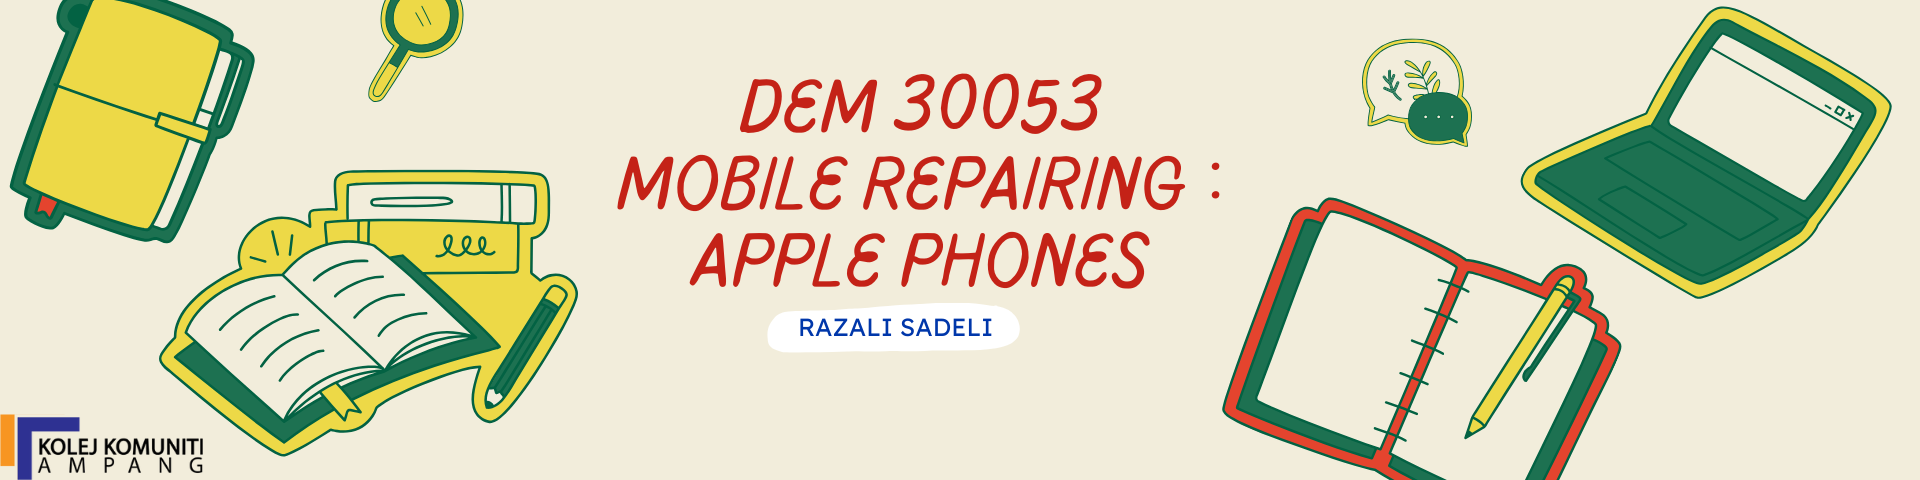 DEM30053 MOBILE REPAIRING : APPLE IPHONES